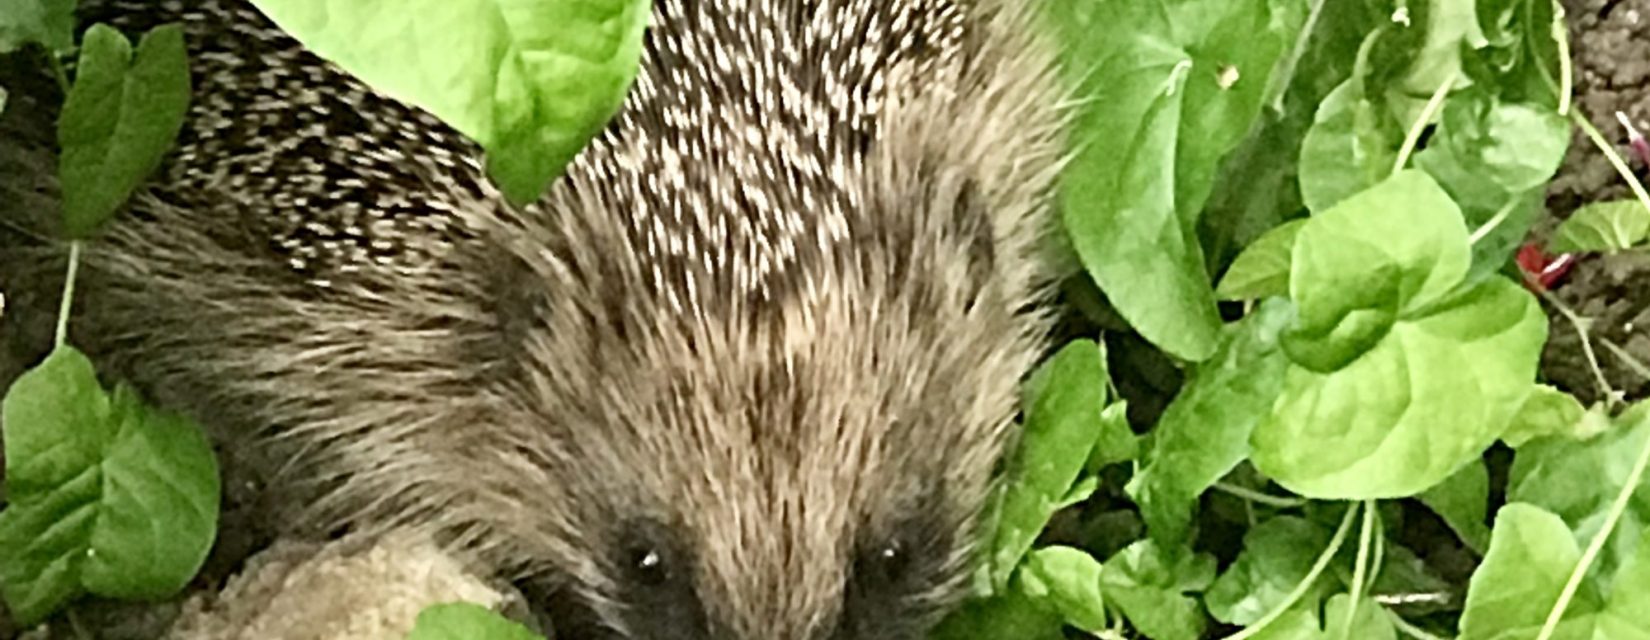 hedgehog in the foliage